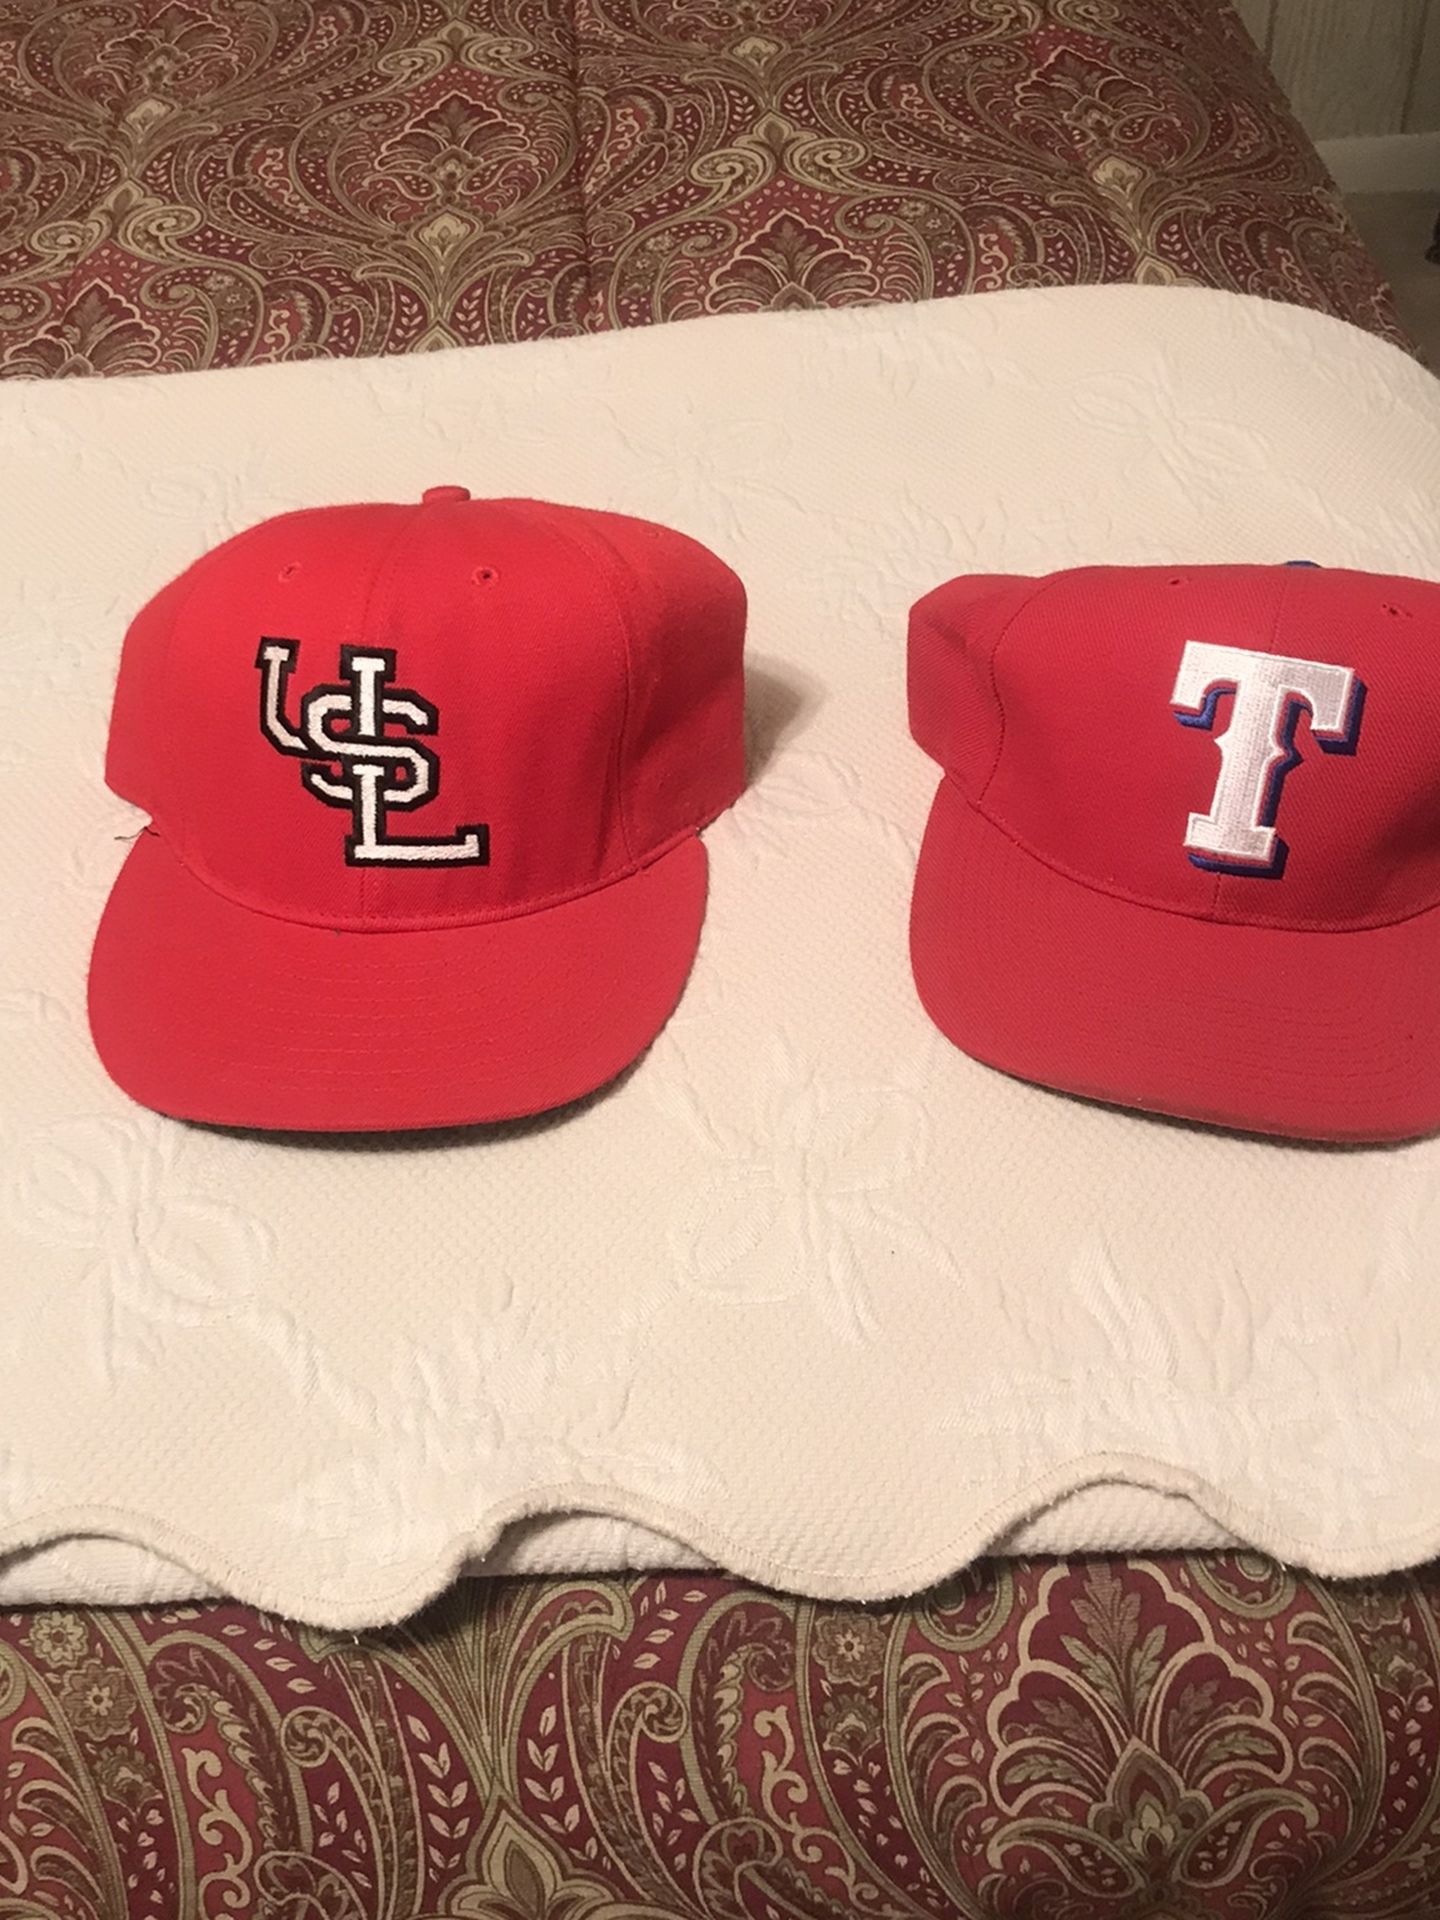 USL & Texas Ranger Caps 40.00 Each {contact info removed}